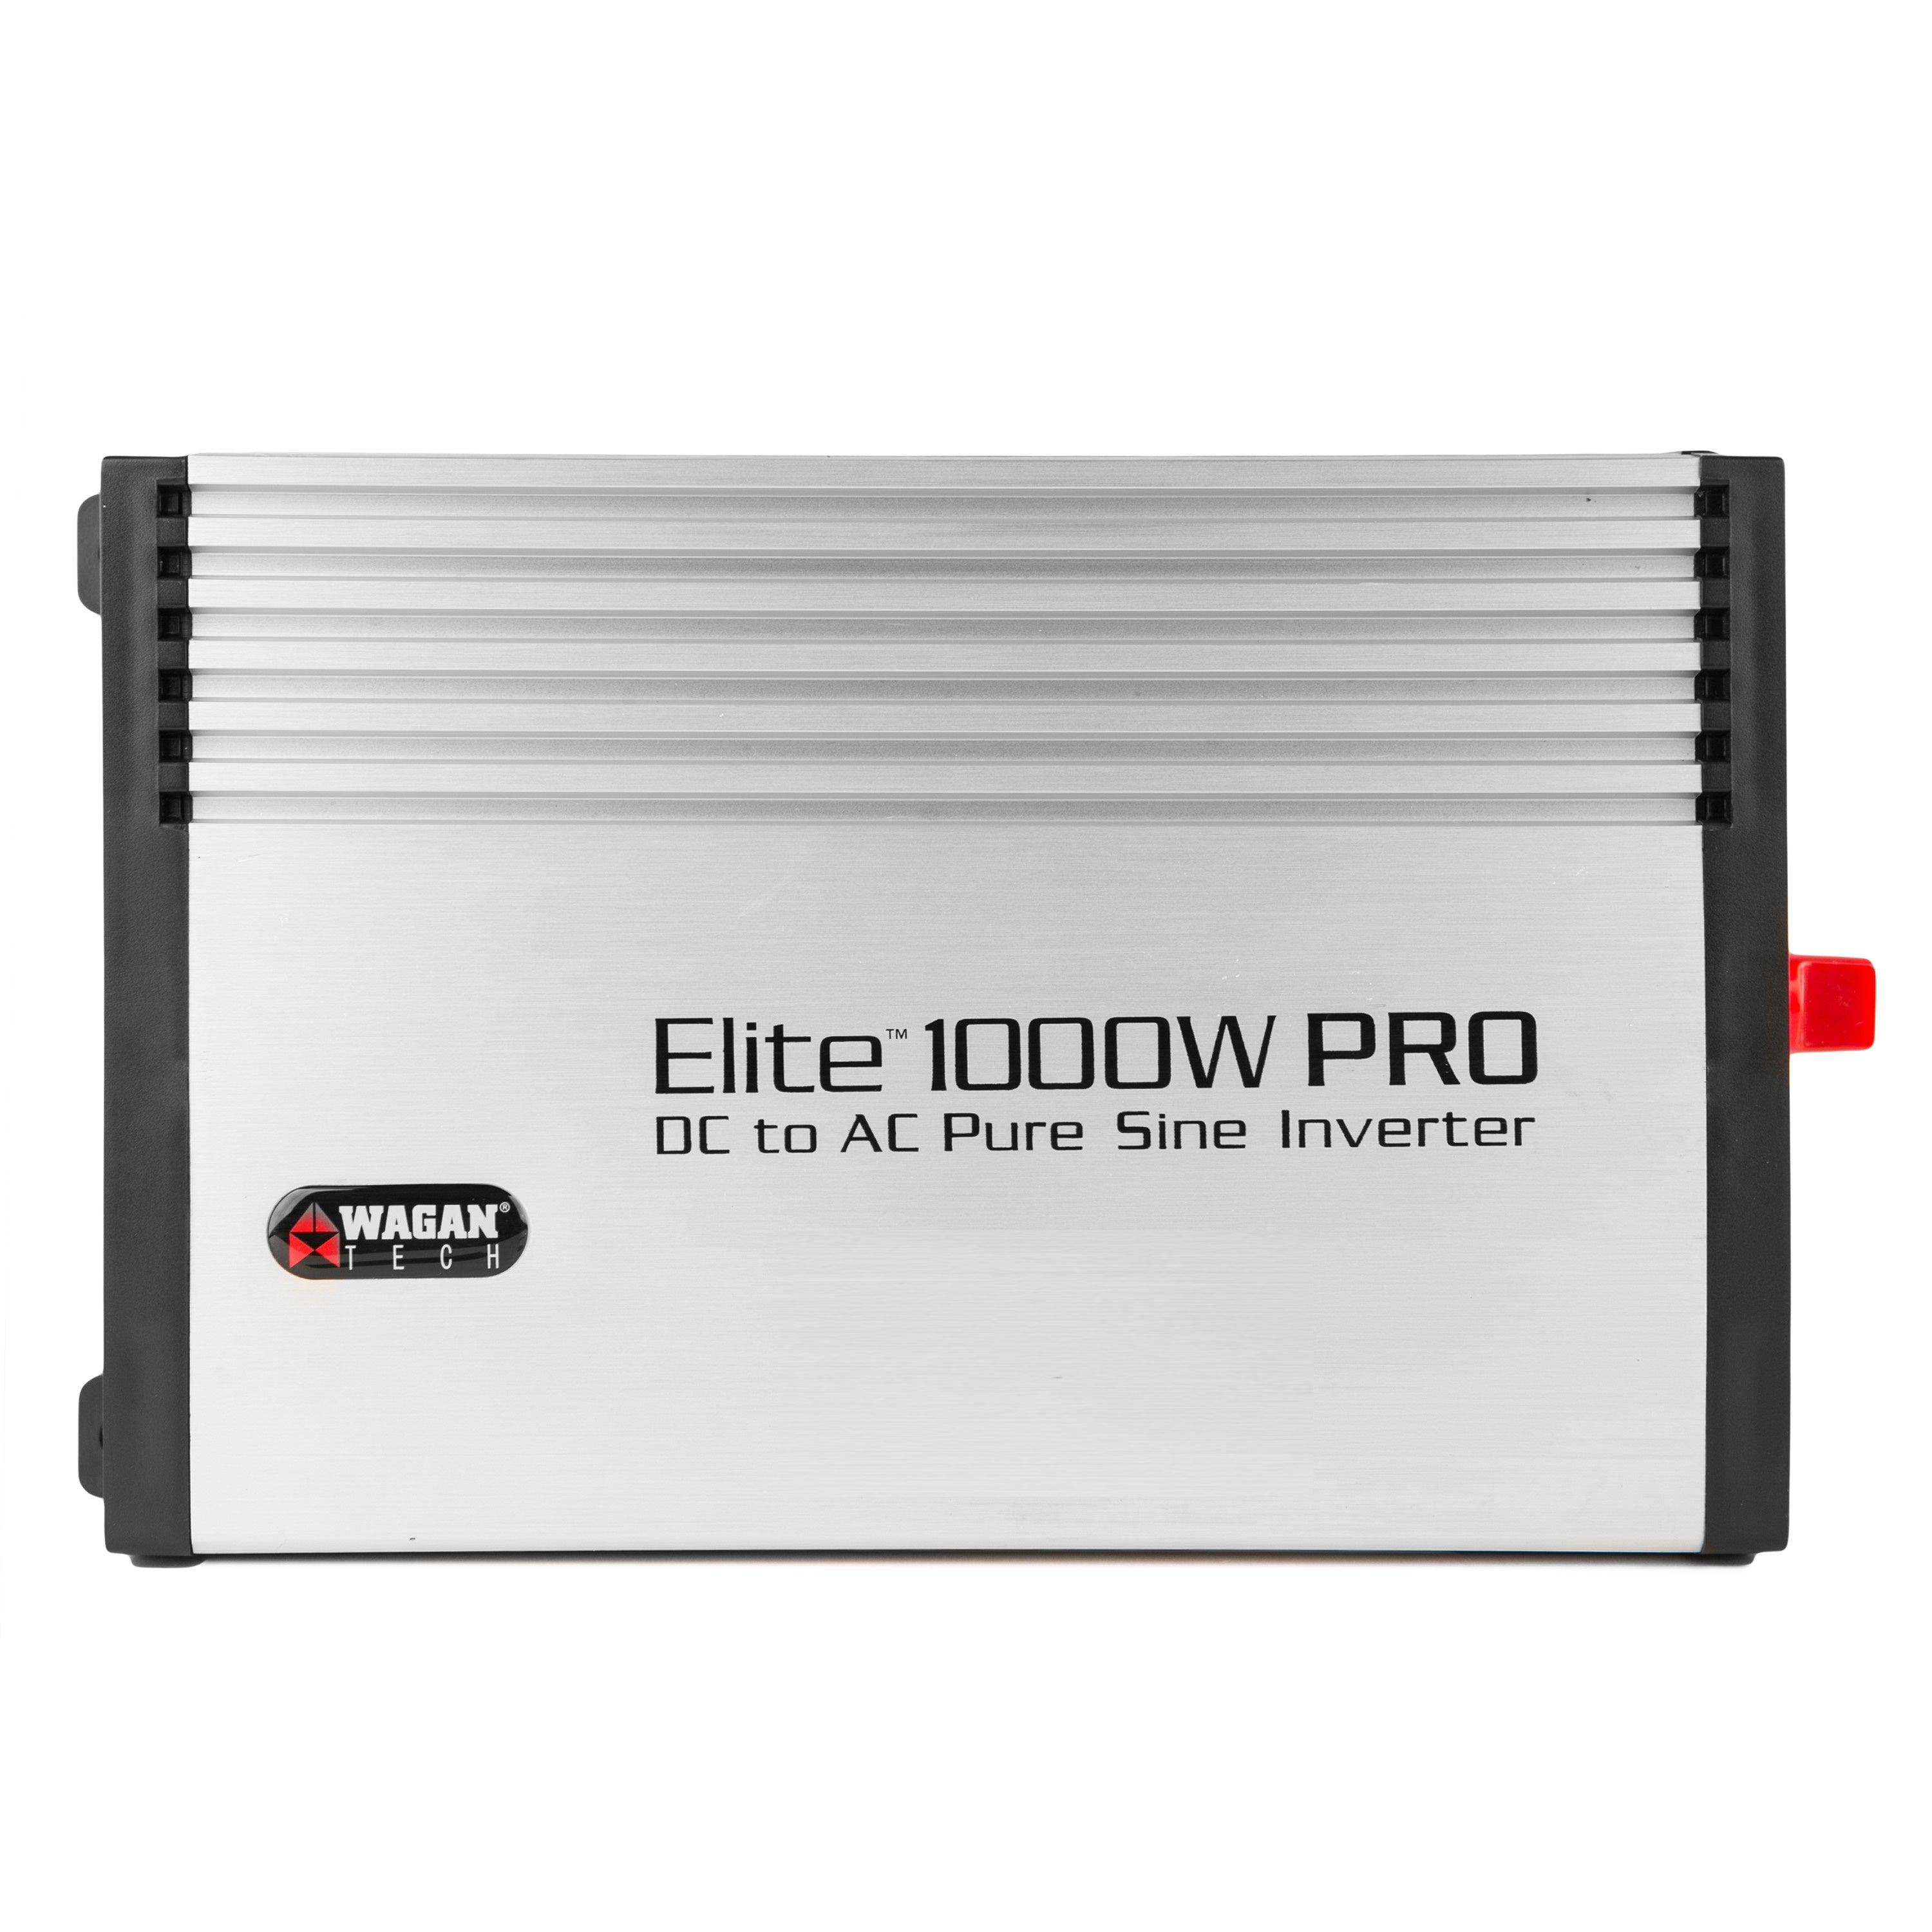 Elite 1000W Pro 220V Power Inverter | Tech | Wagan Corporation